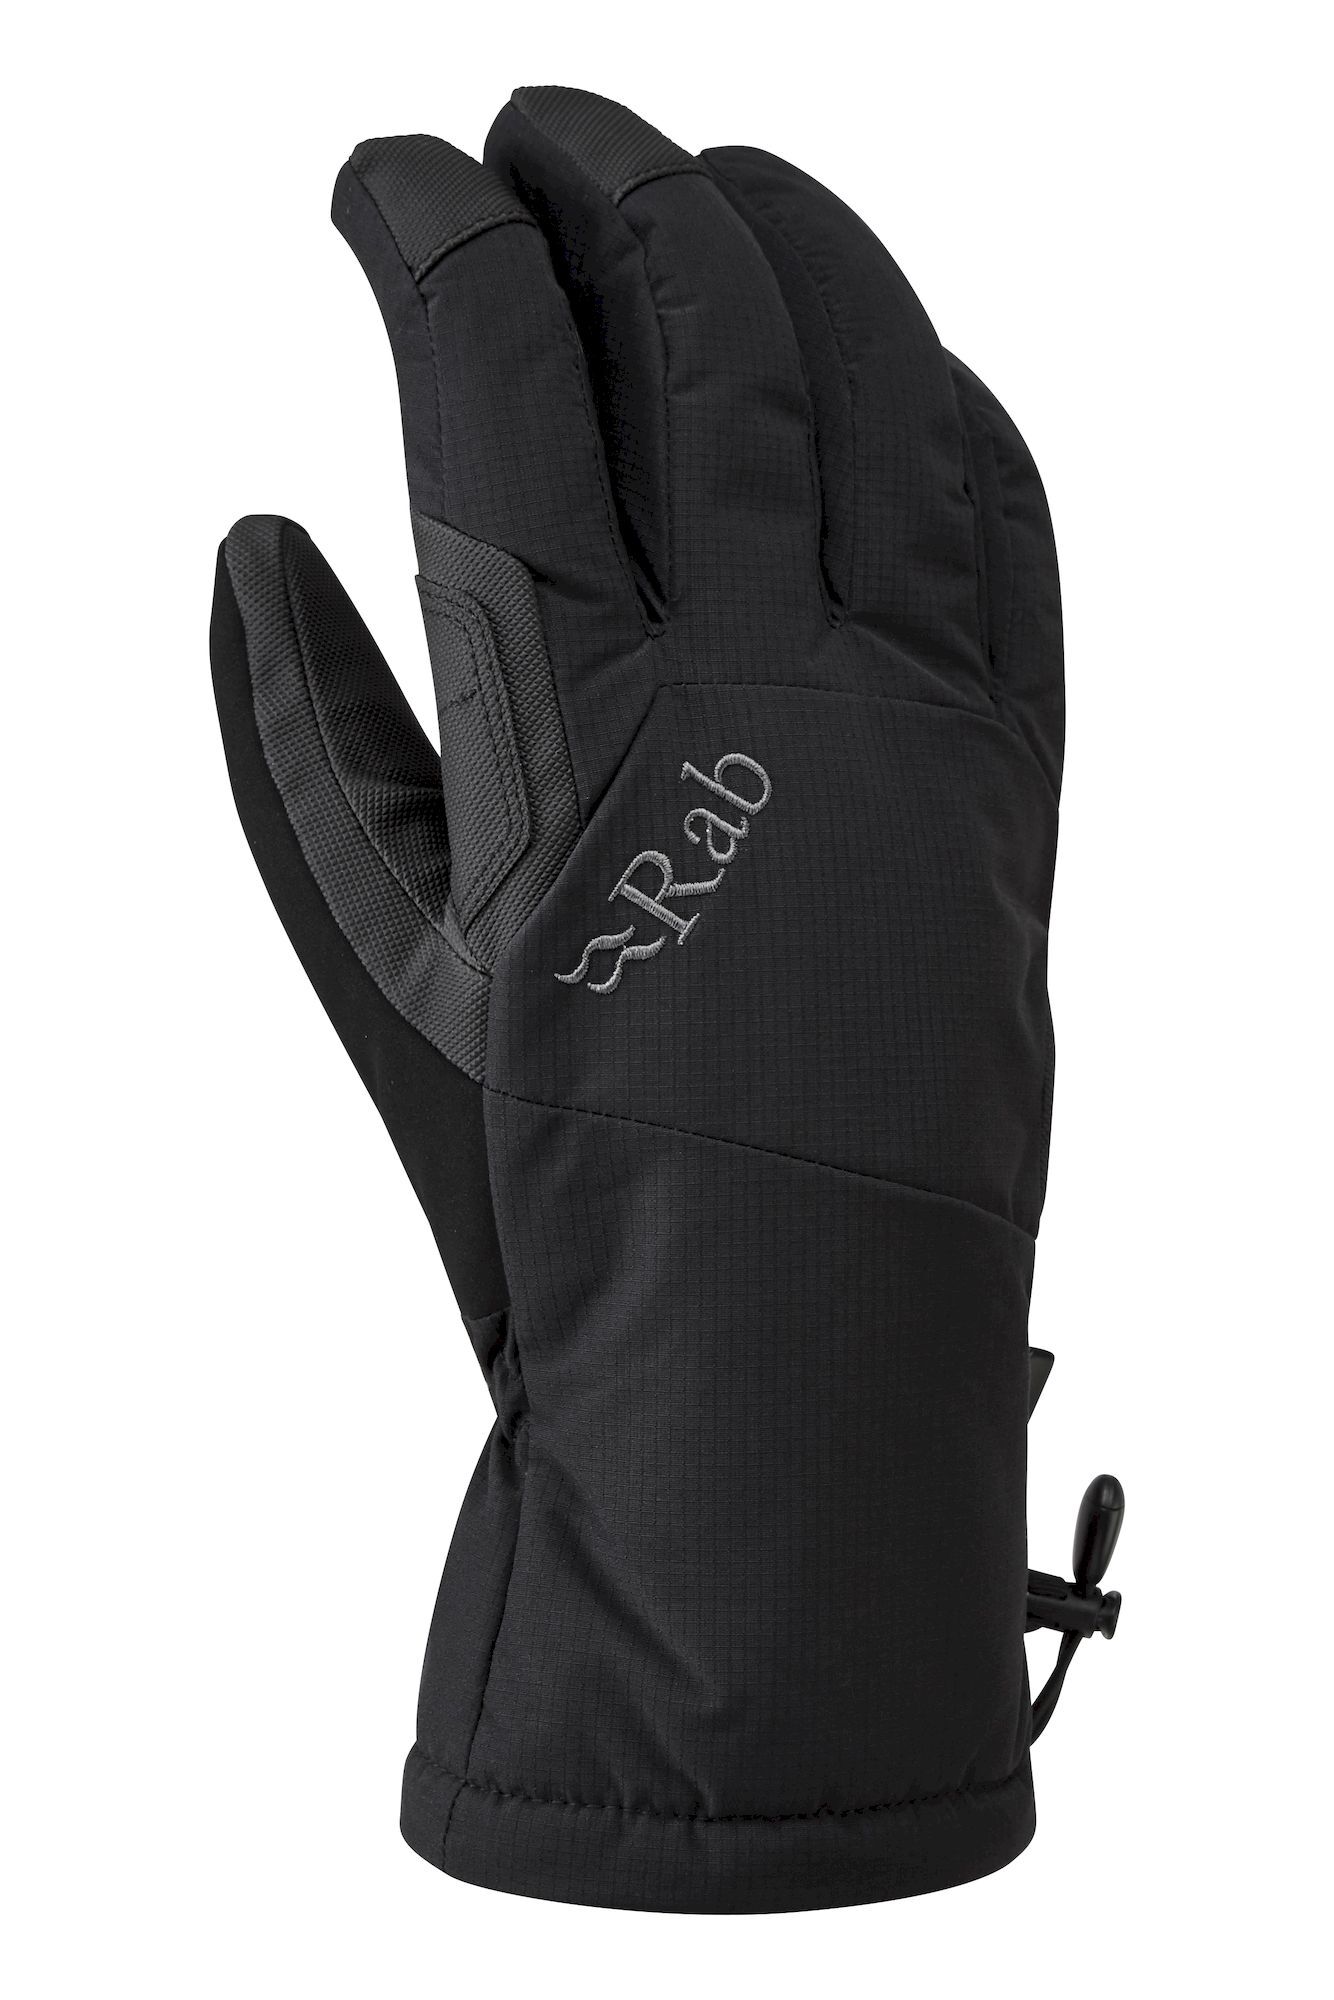 Rab Storm Gloves - Ski gloves - Men's | Hardloop